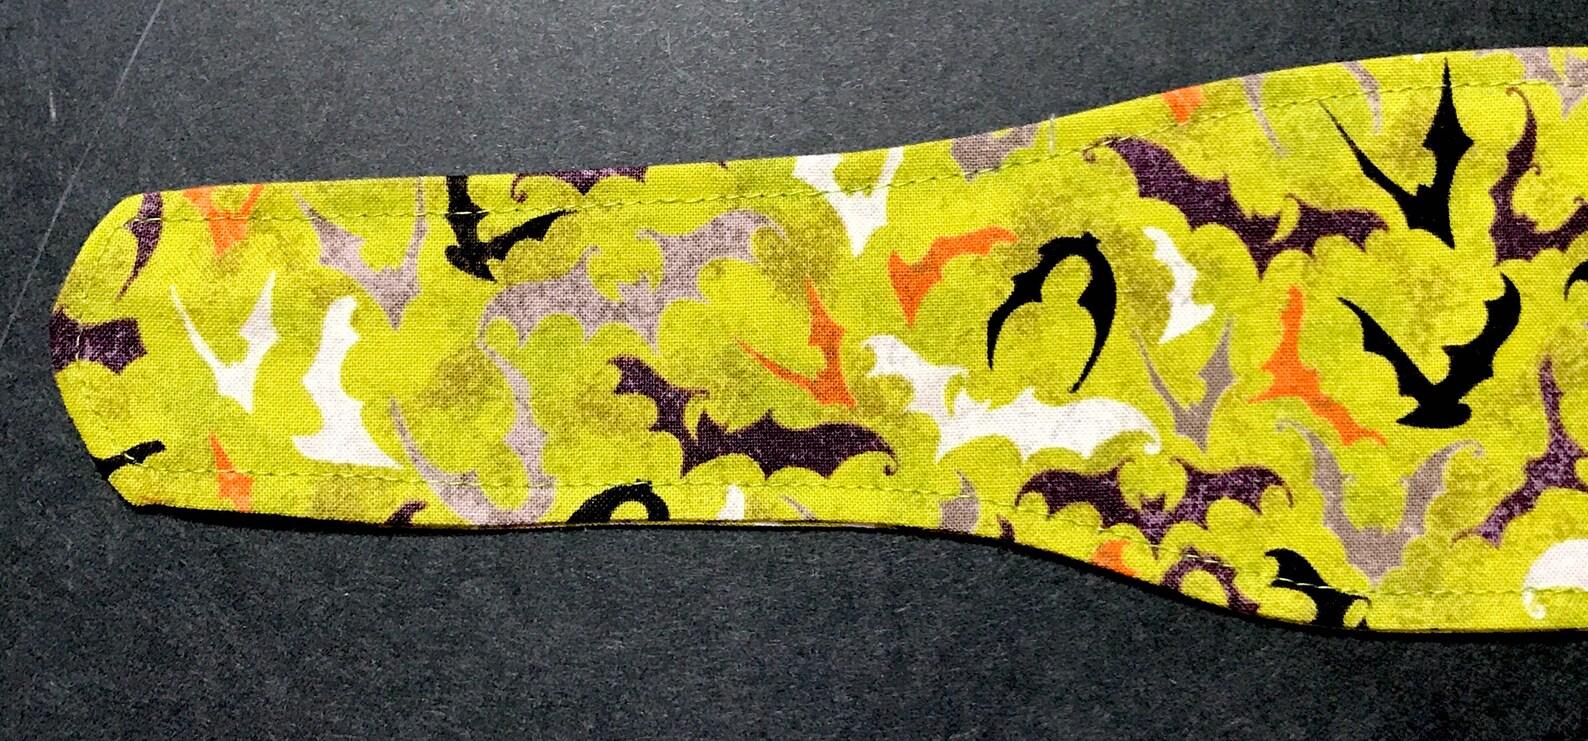 3” Wide Bats headband, self tie, hair wrap, pin up style, hair tie, neck scarf, rockabilly, purse scarf, hat scarf, Halloween